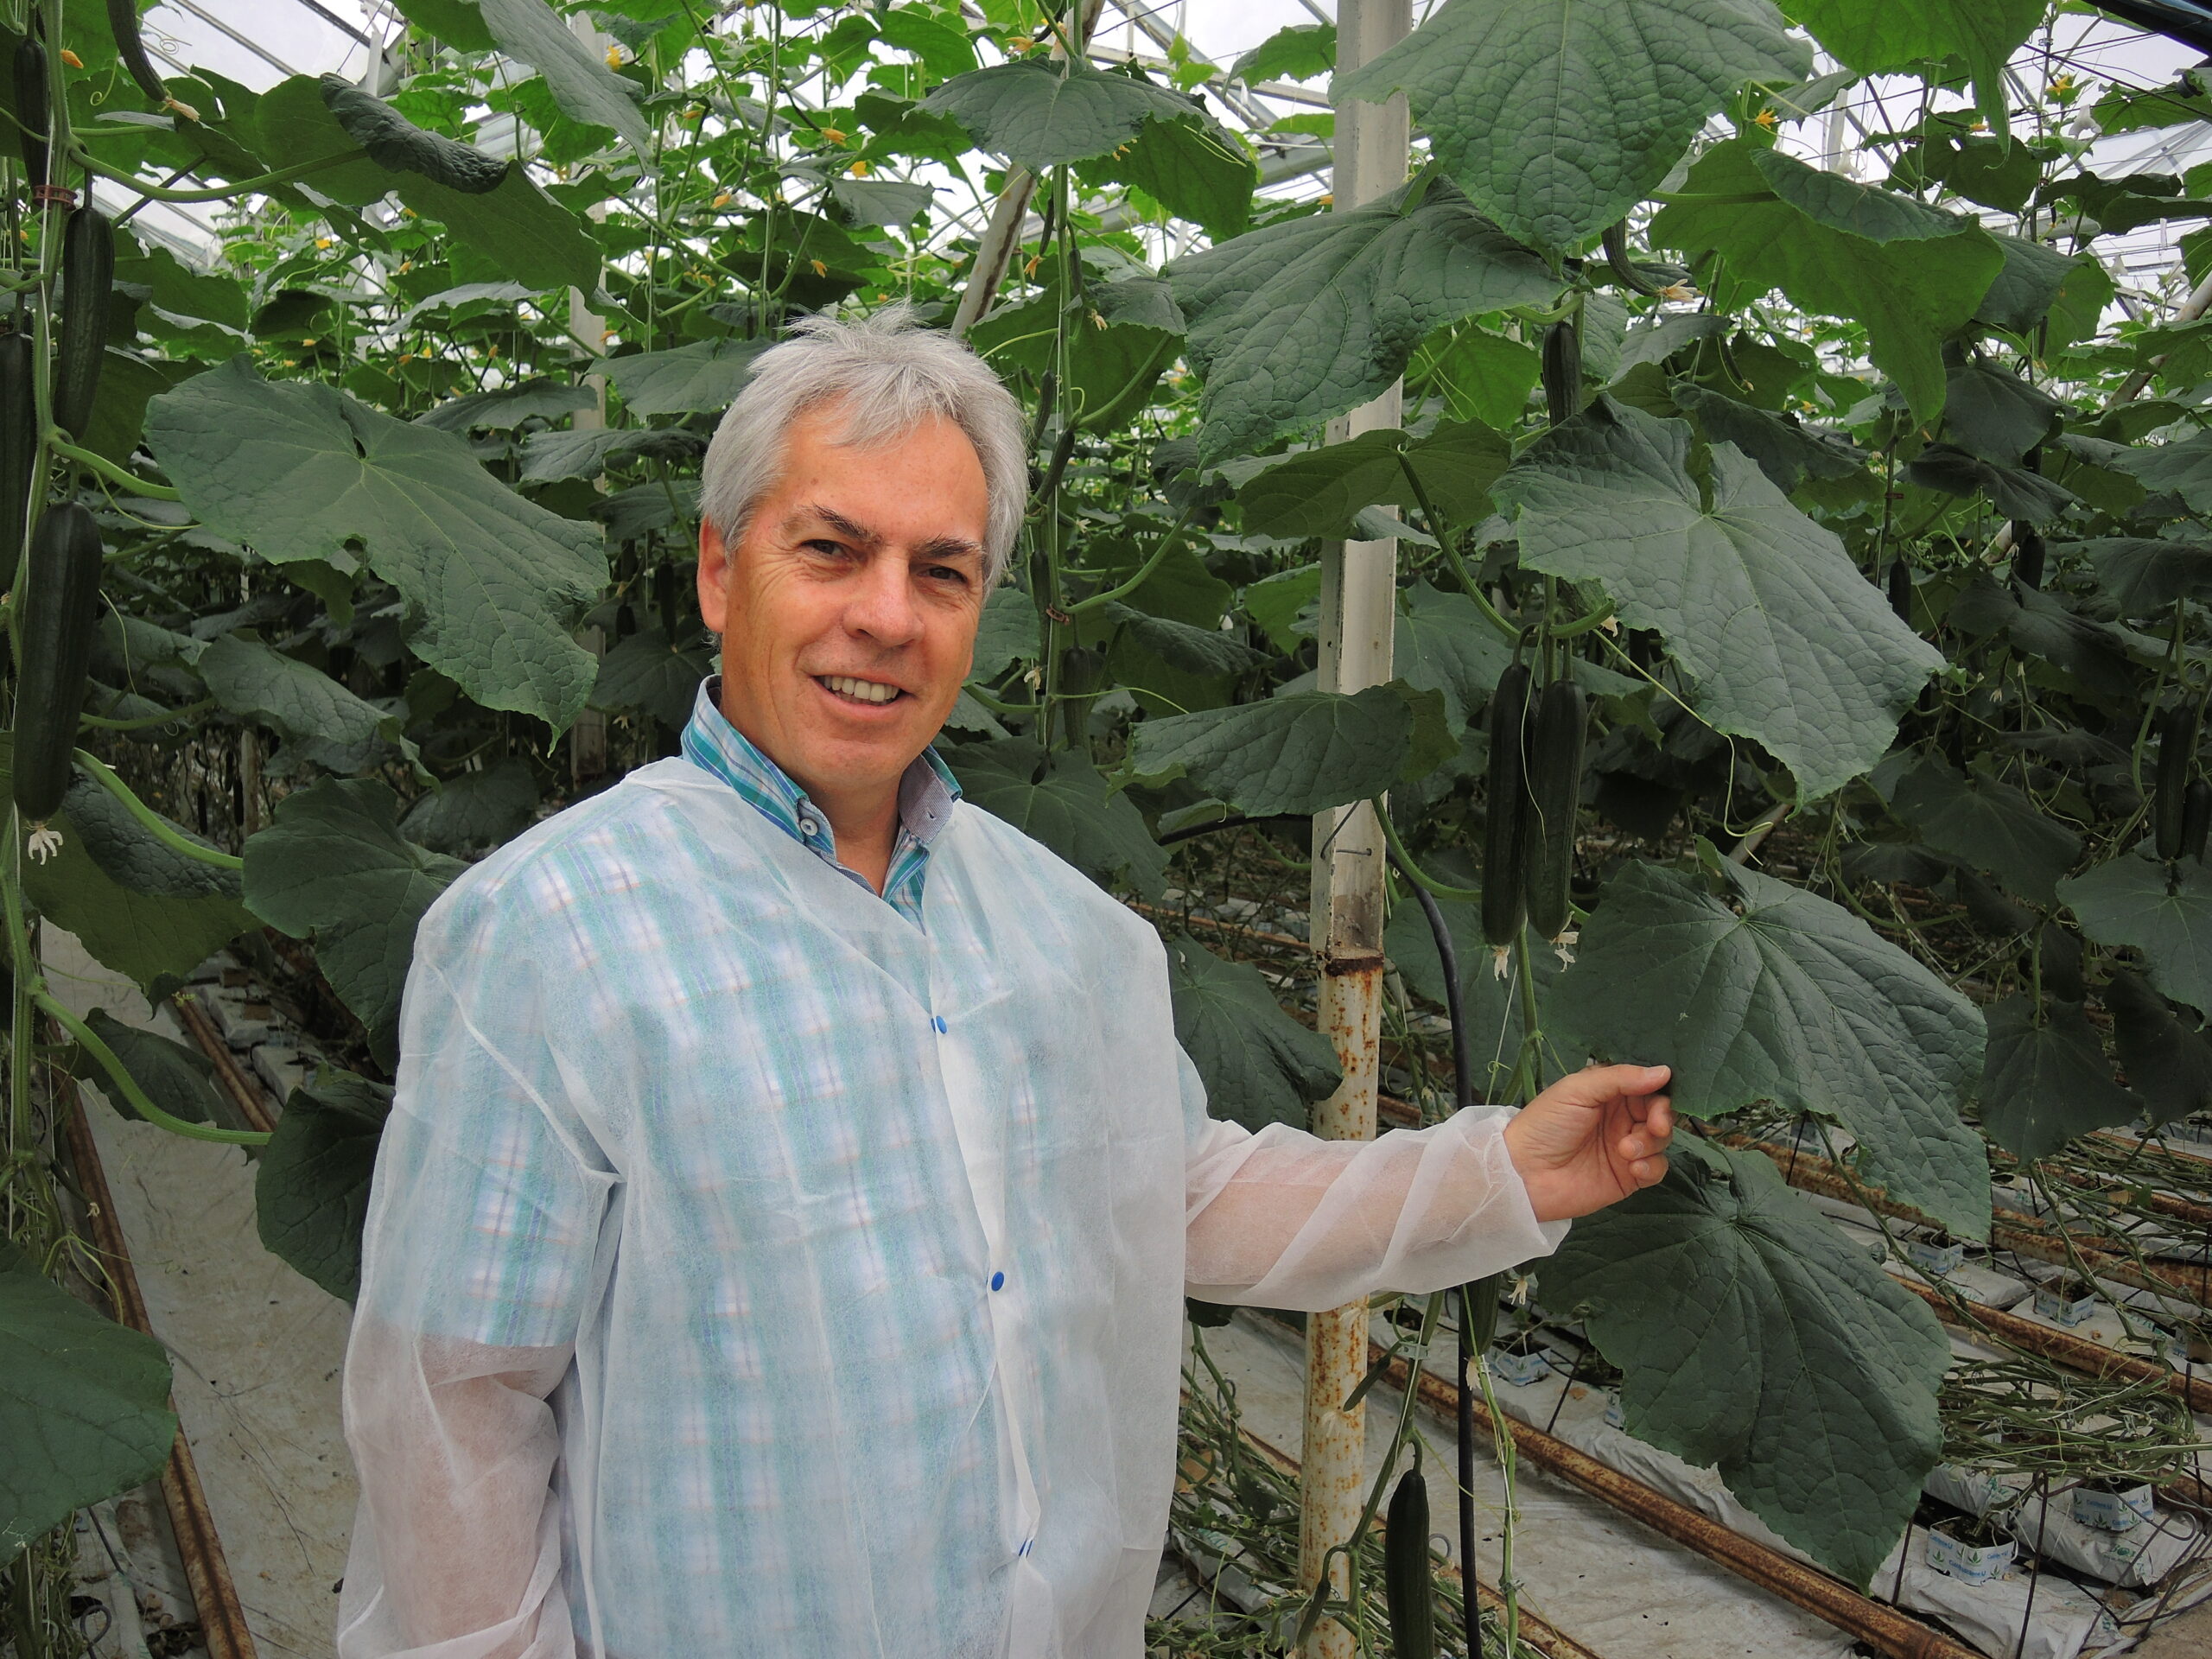 Hazera is an imminent global cucumber specialist